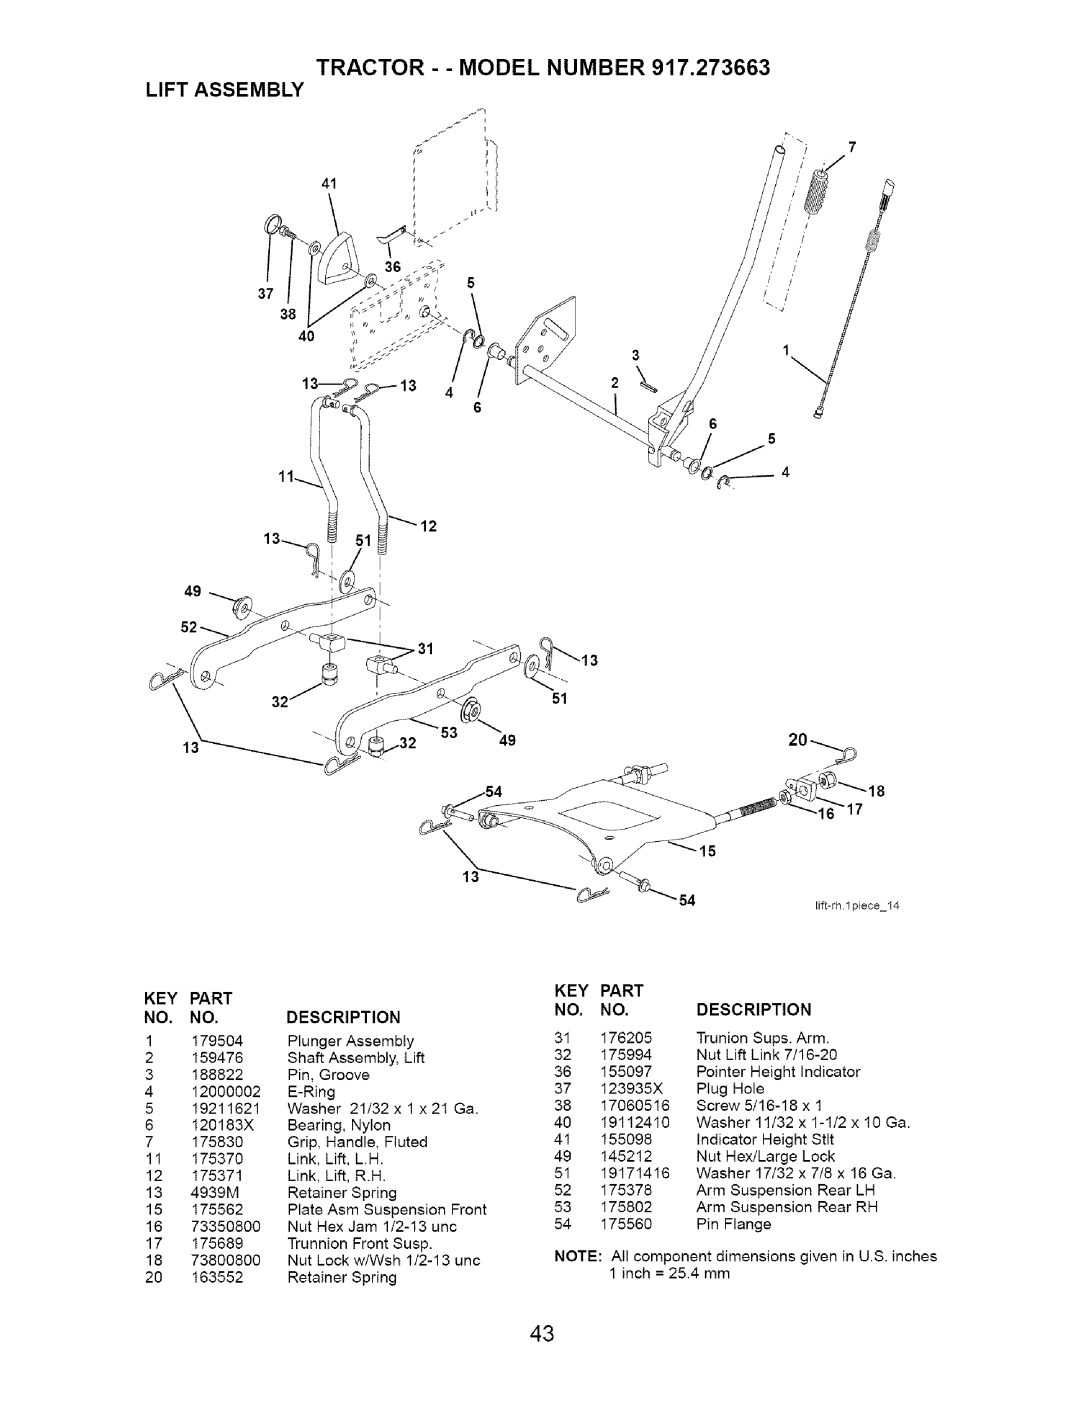 Craftsman 917.273663 owner manual TRACTOR - - MODEL NUMBER 917,273663, Lift Assembly, Part, Description 